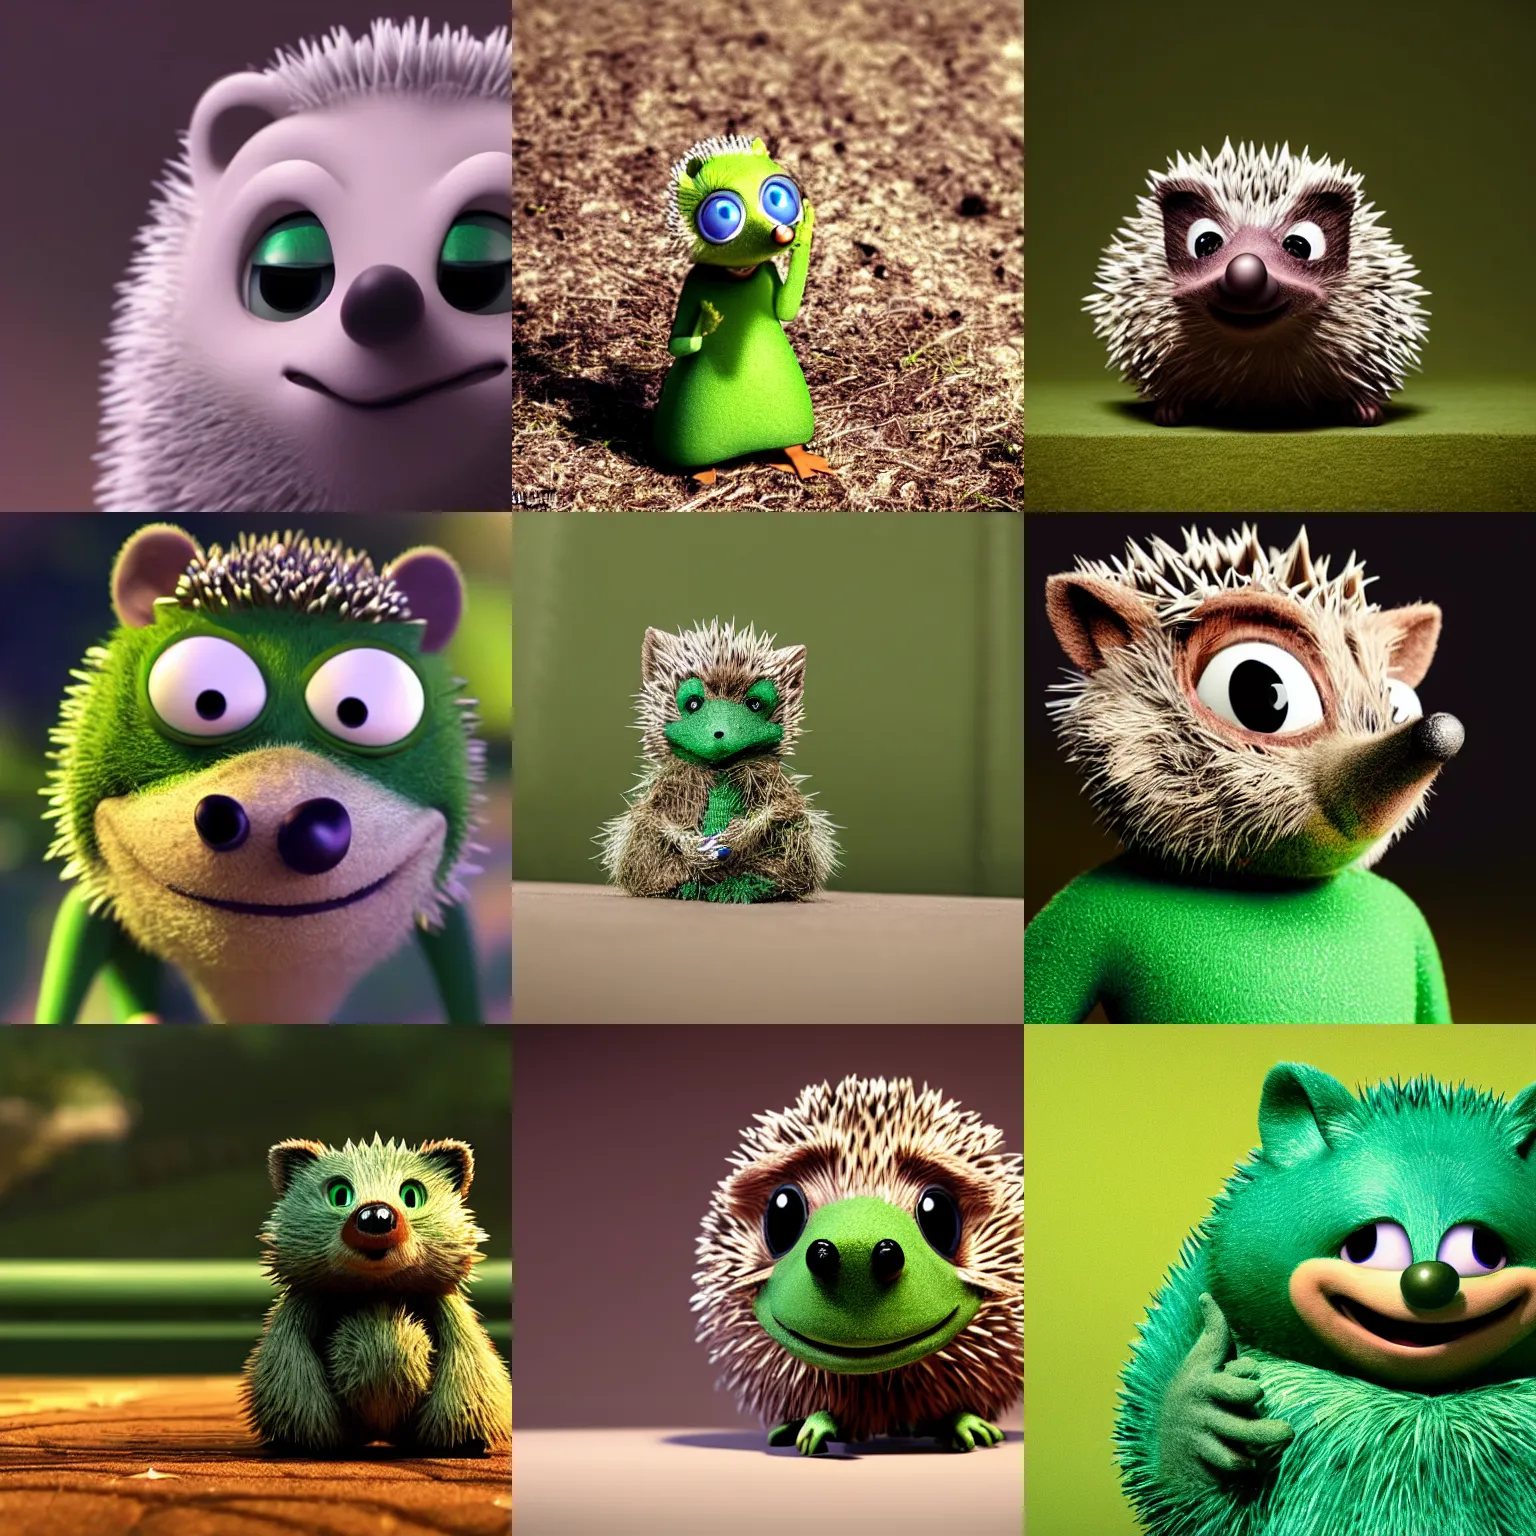 Prompt: green anthropomorphic hedgehog by Pixar,Disney movie, cinematic shot,in the style of Pixar, shallow depth of focus